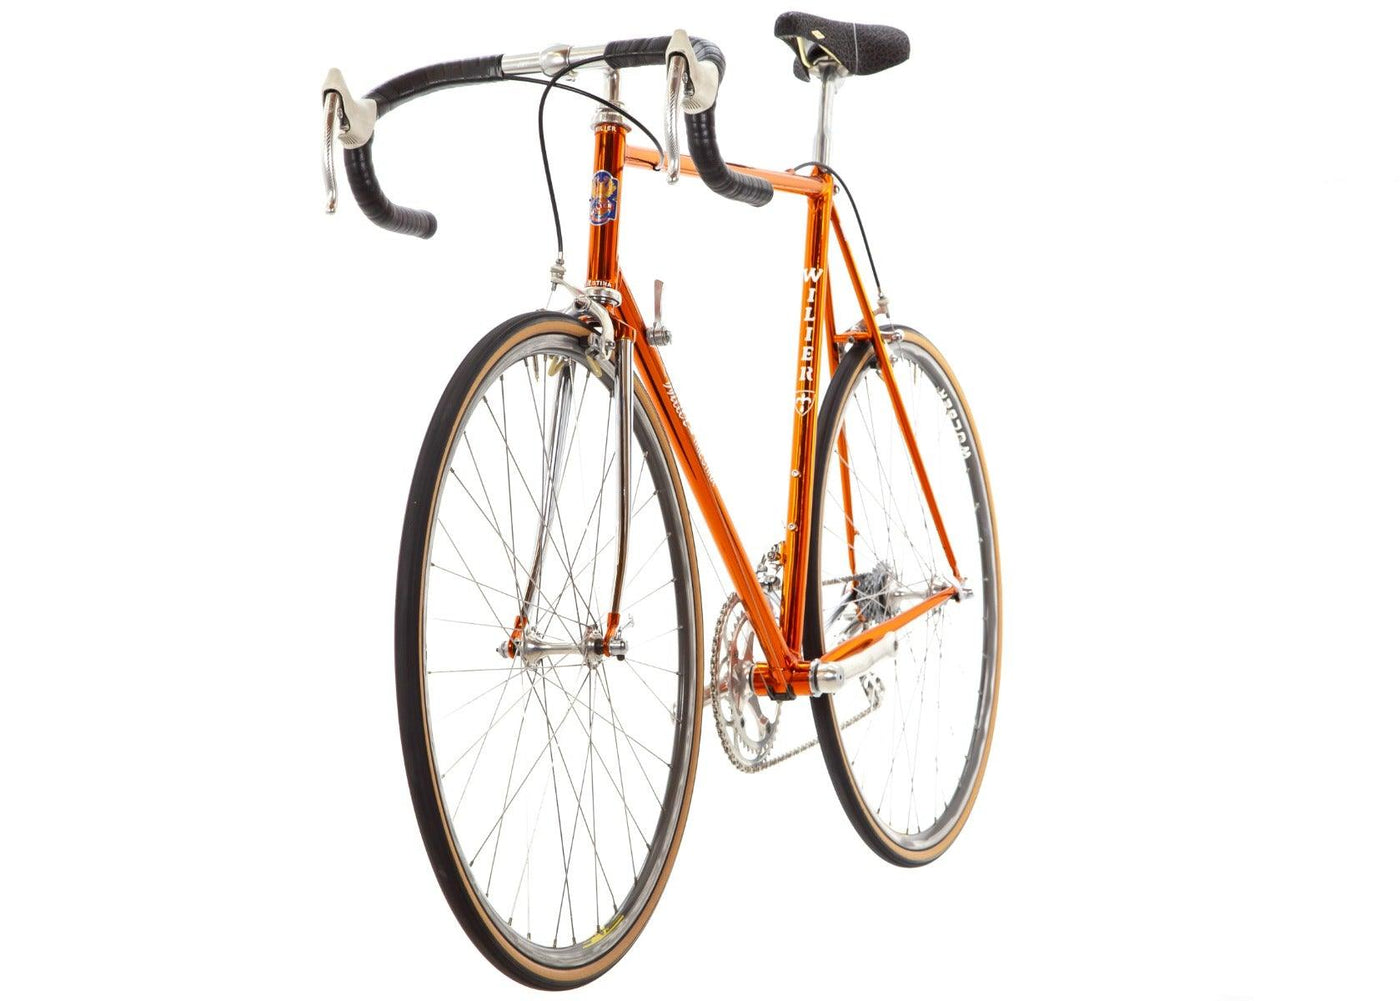 Wilier Triestina Ramata Chorus Road Bicycle 1980s - Steel Vintage Bikes